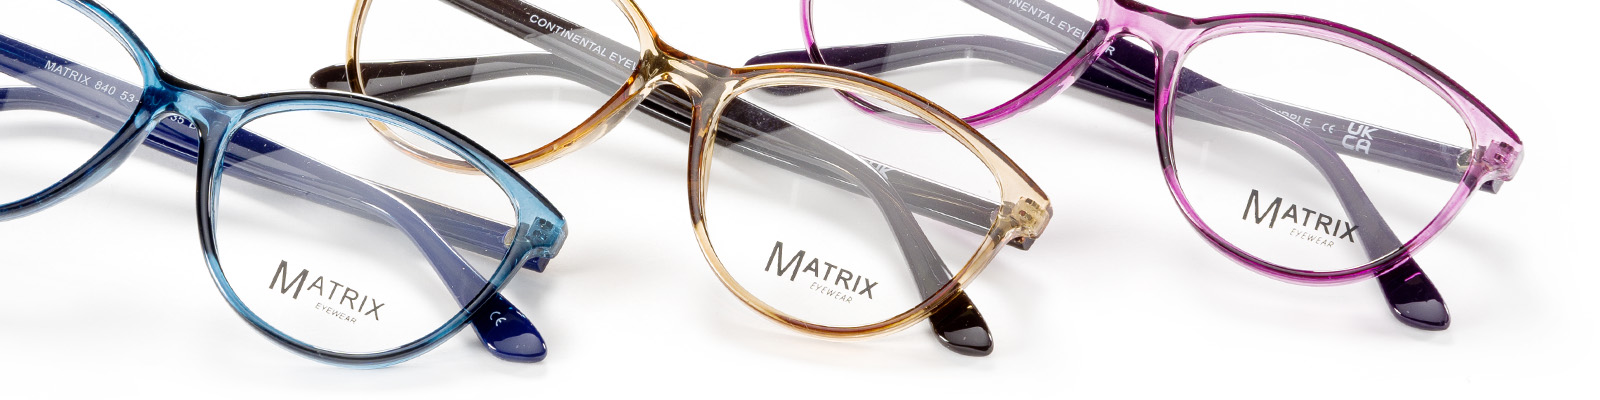 Matrix Eyewear frames